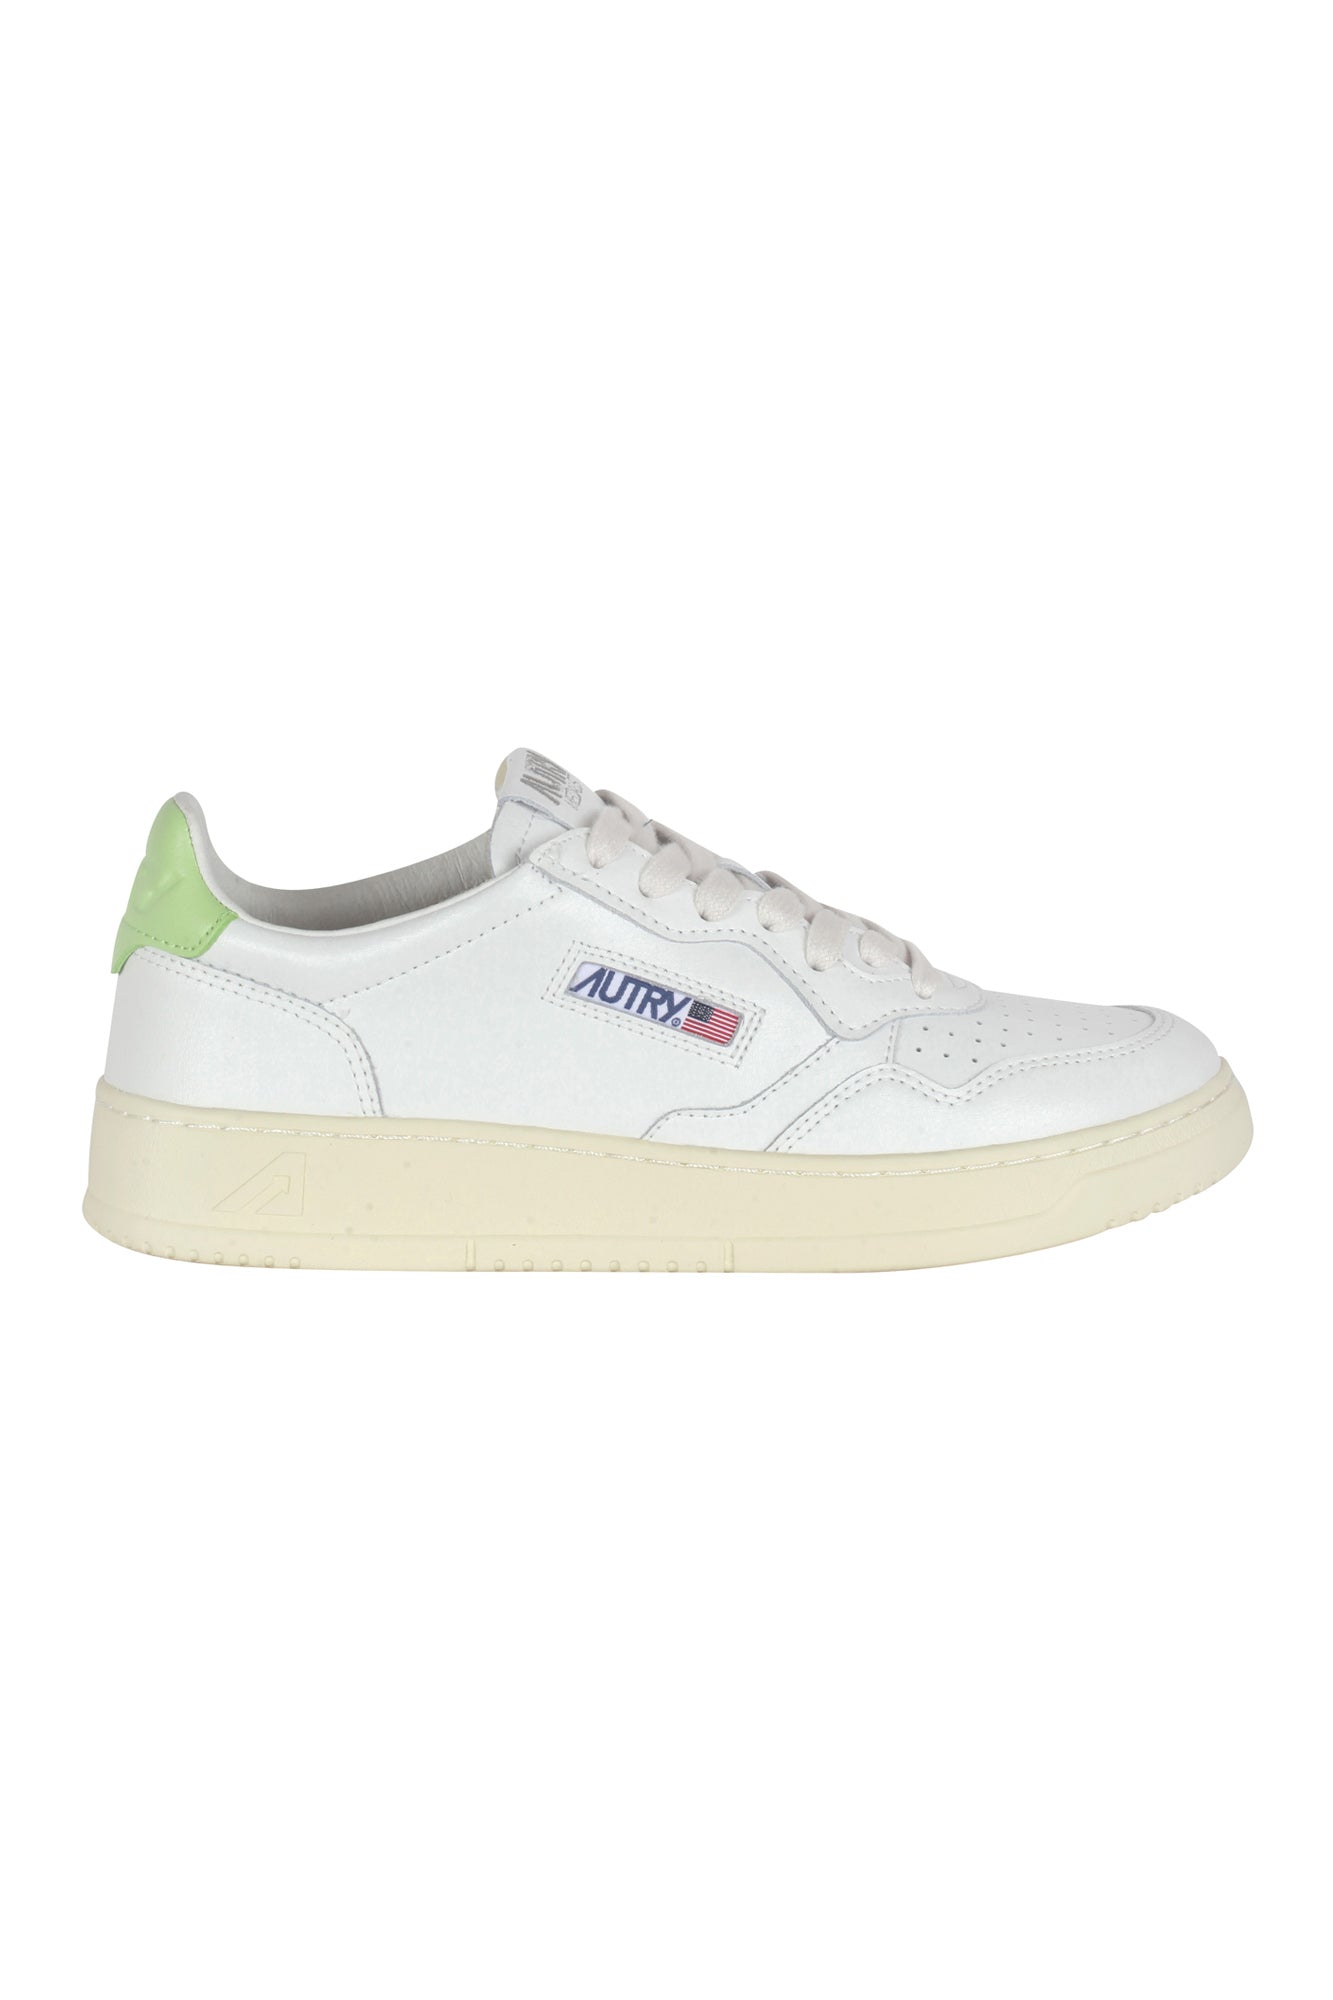 Autry - Sneakers - 430072 - Bianco/Verde mela